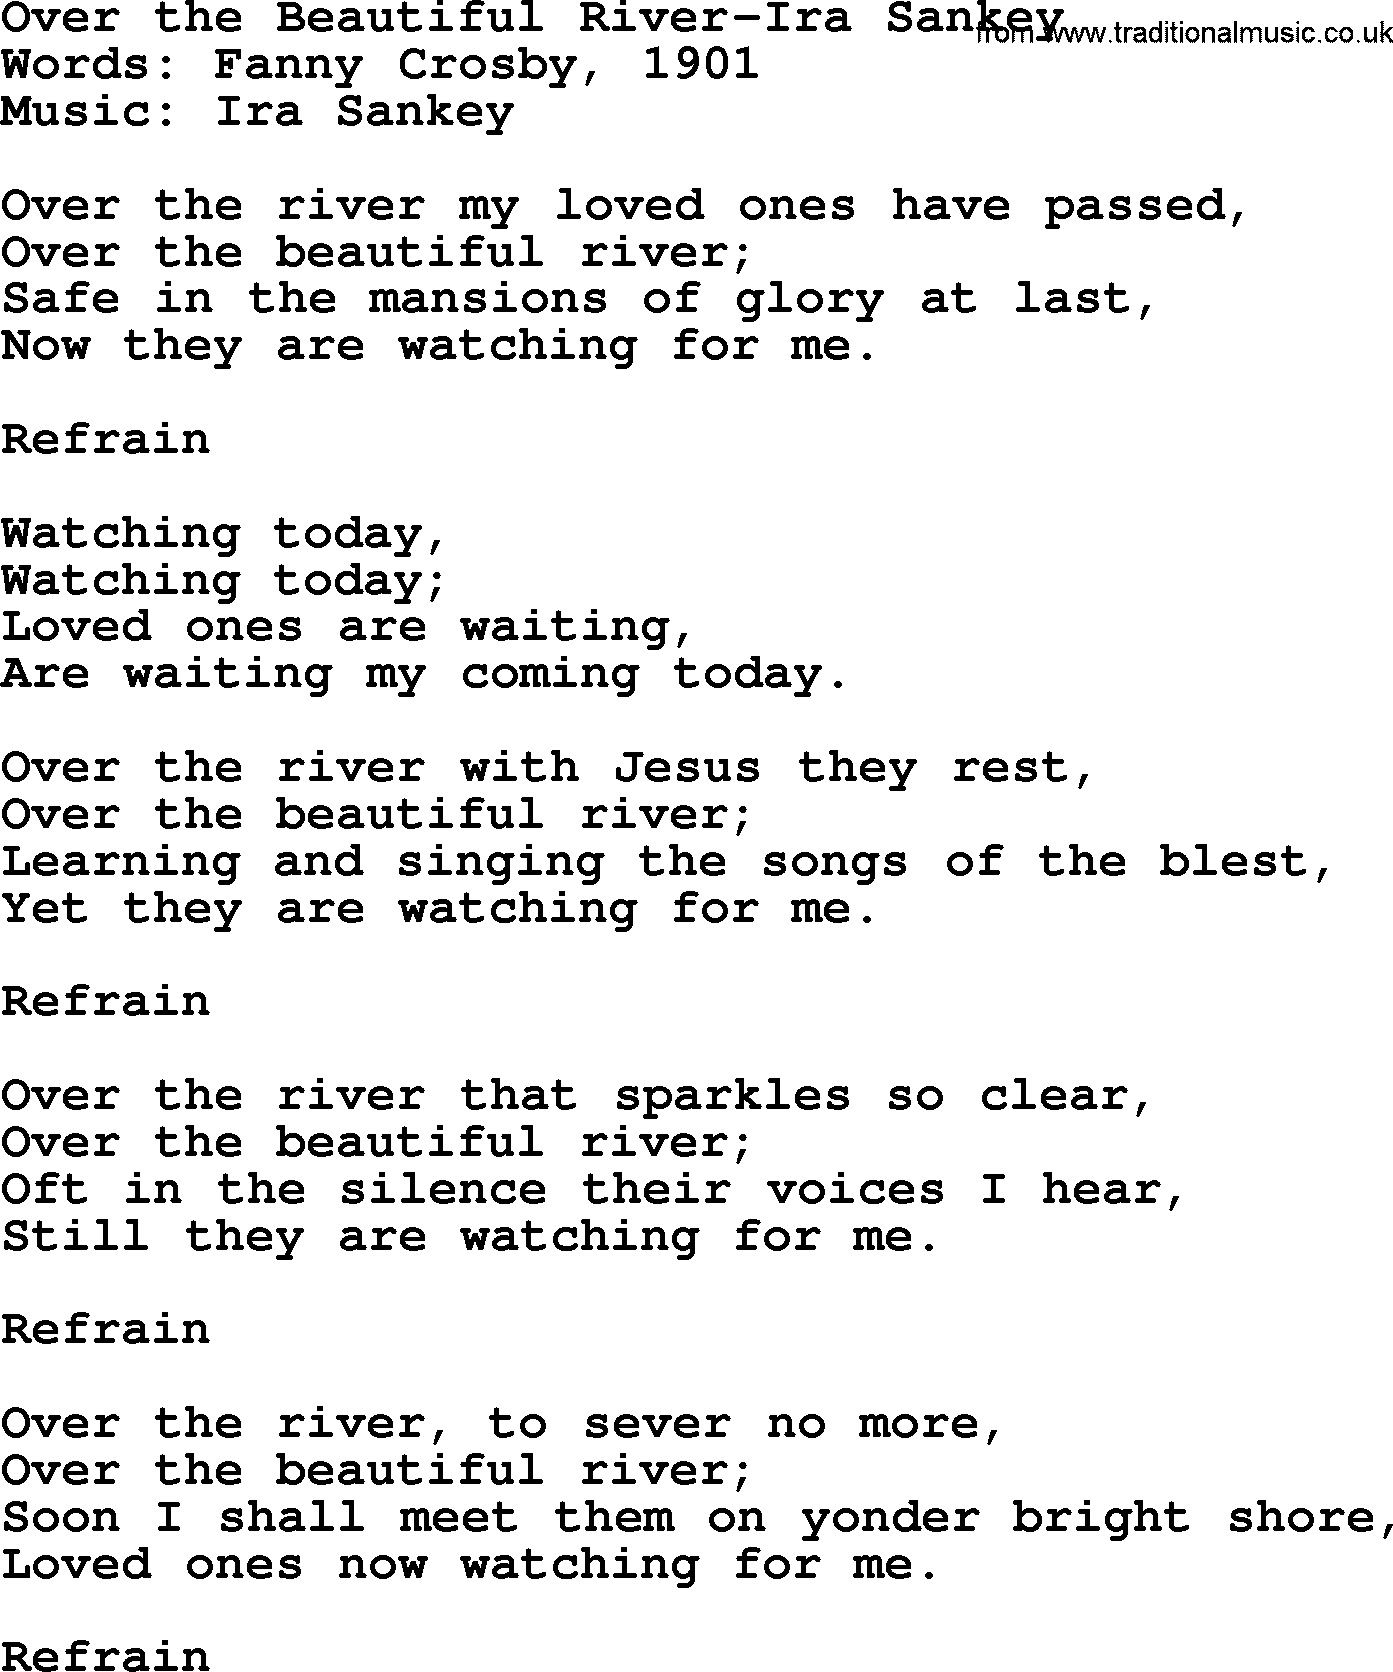 Ira Sankey hymn: Over the Beautiful River-Ira Sankey, lyrics